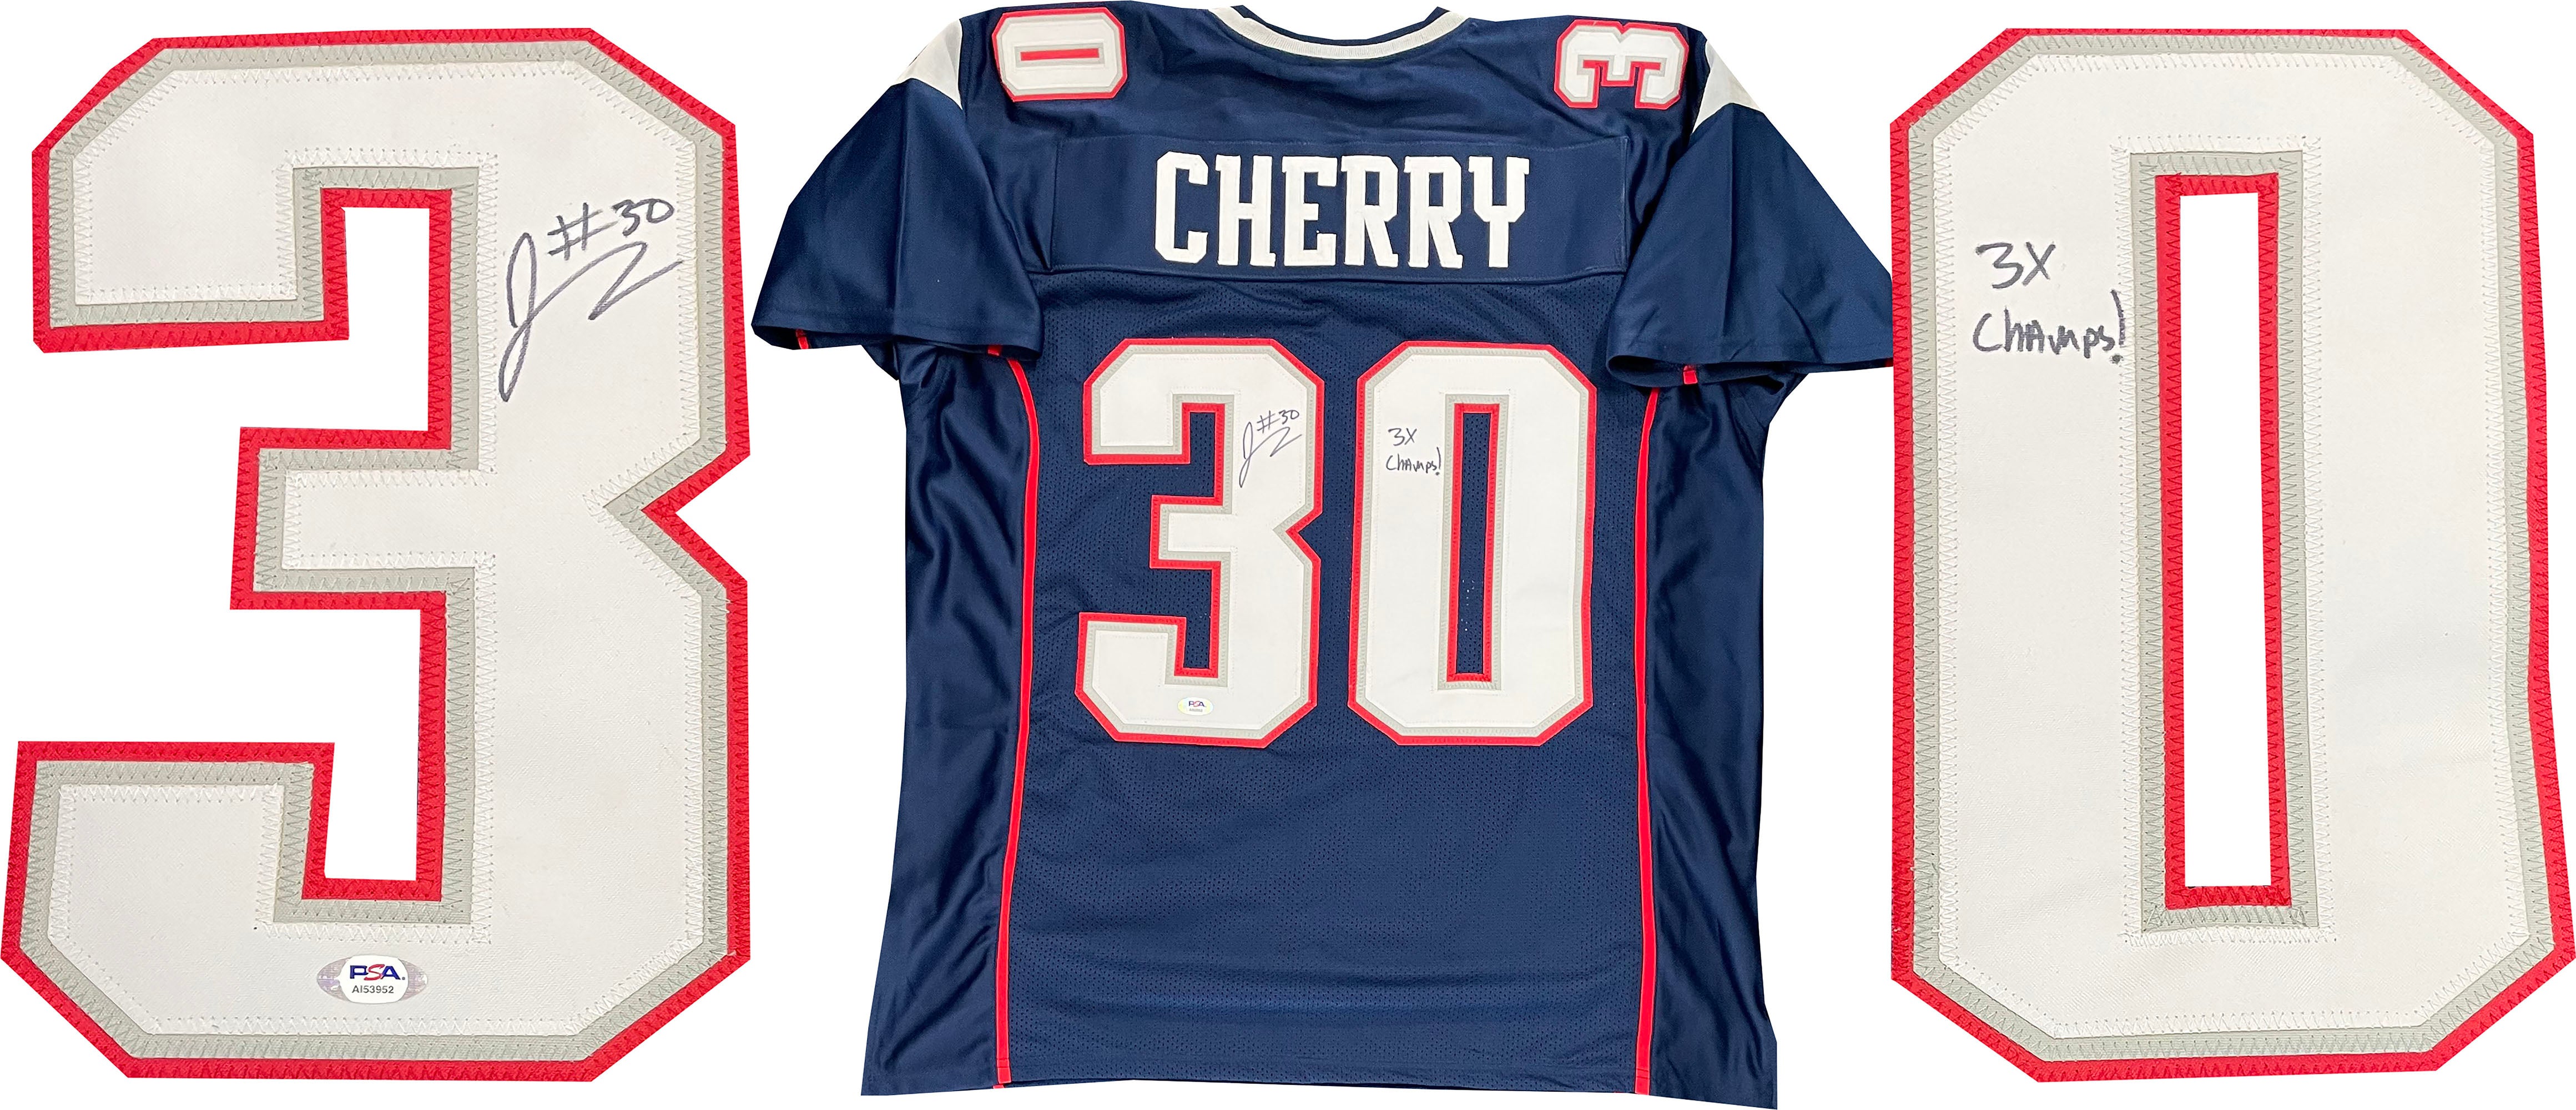 Je'Rod Cherry '3x Champs' Autographed New England Patriots Jersey (PSA